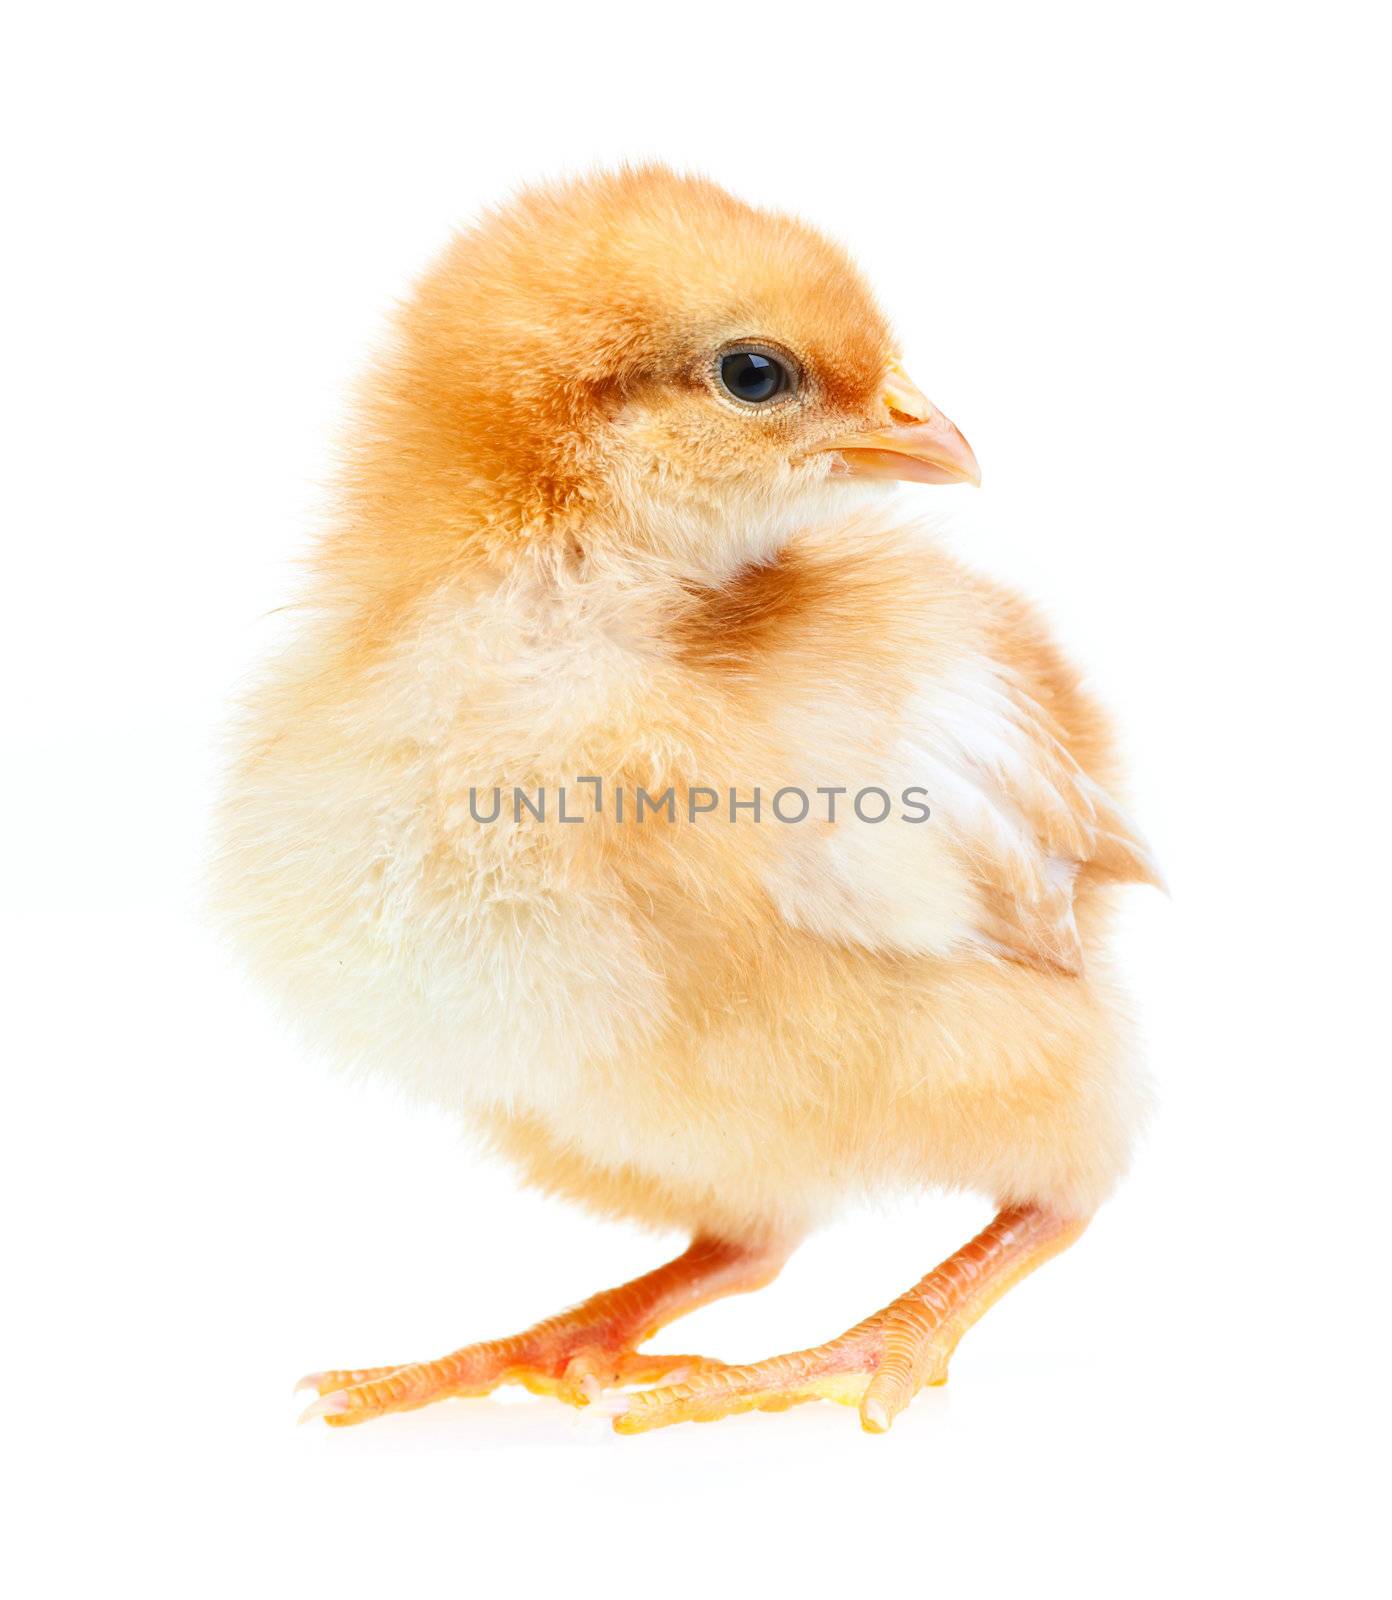 Baby Chicken by naumoid